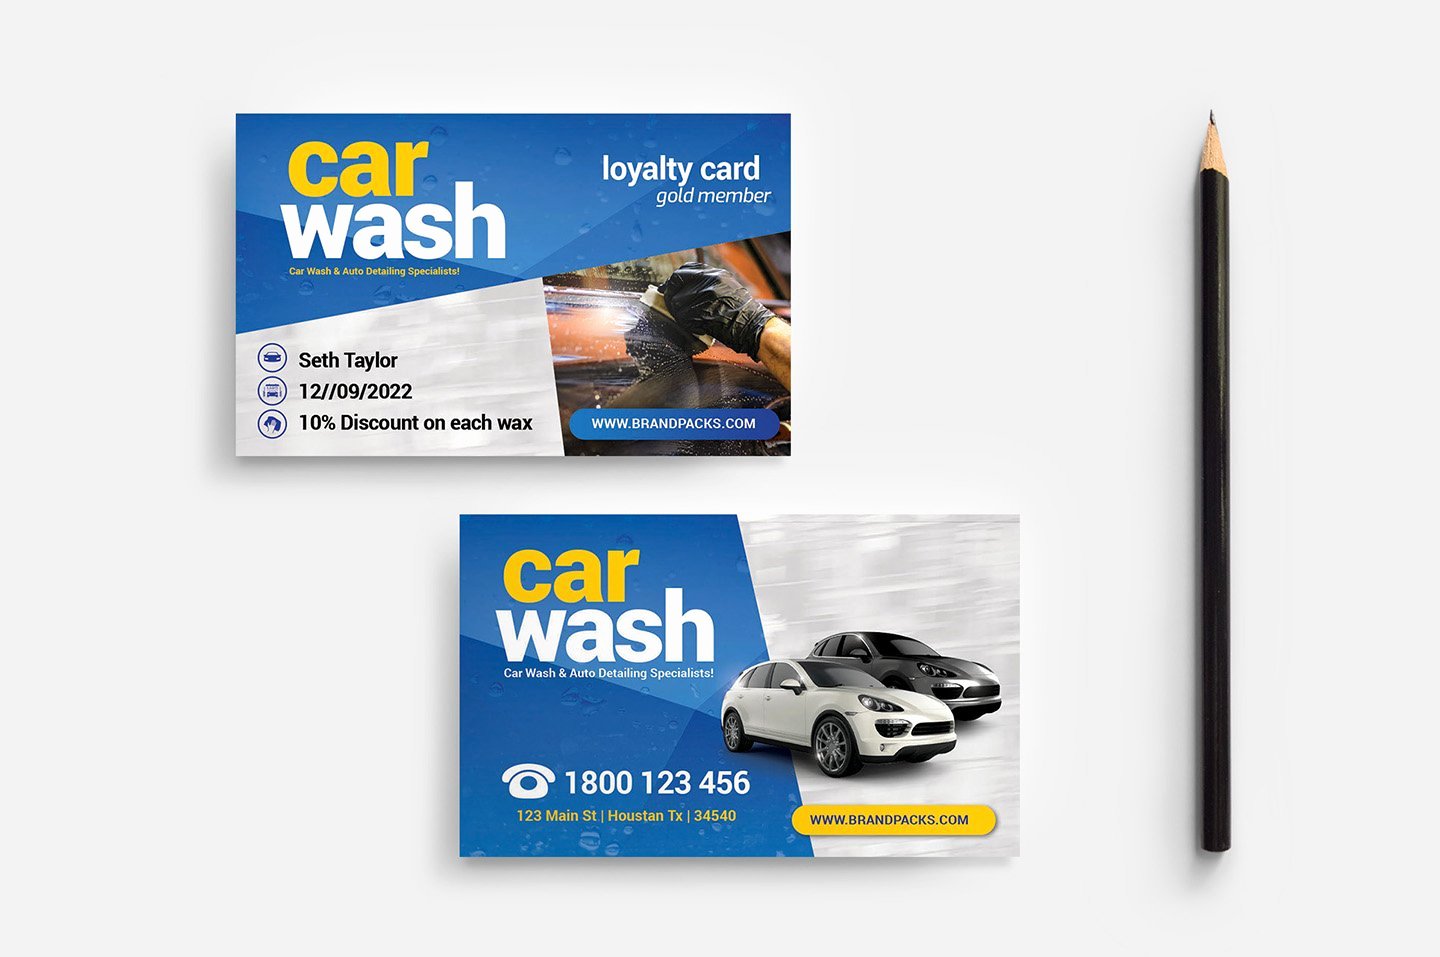 Car Wash Business Cards Inspirational Car Wash Business Card Template Business Card Templates Creative Market